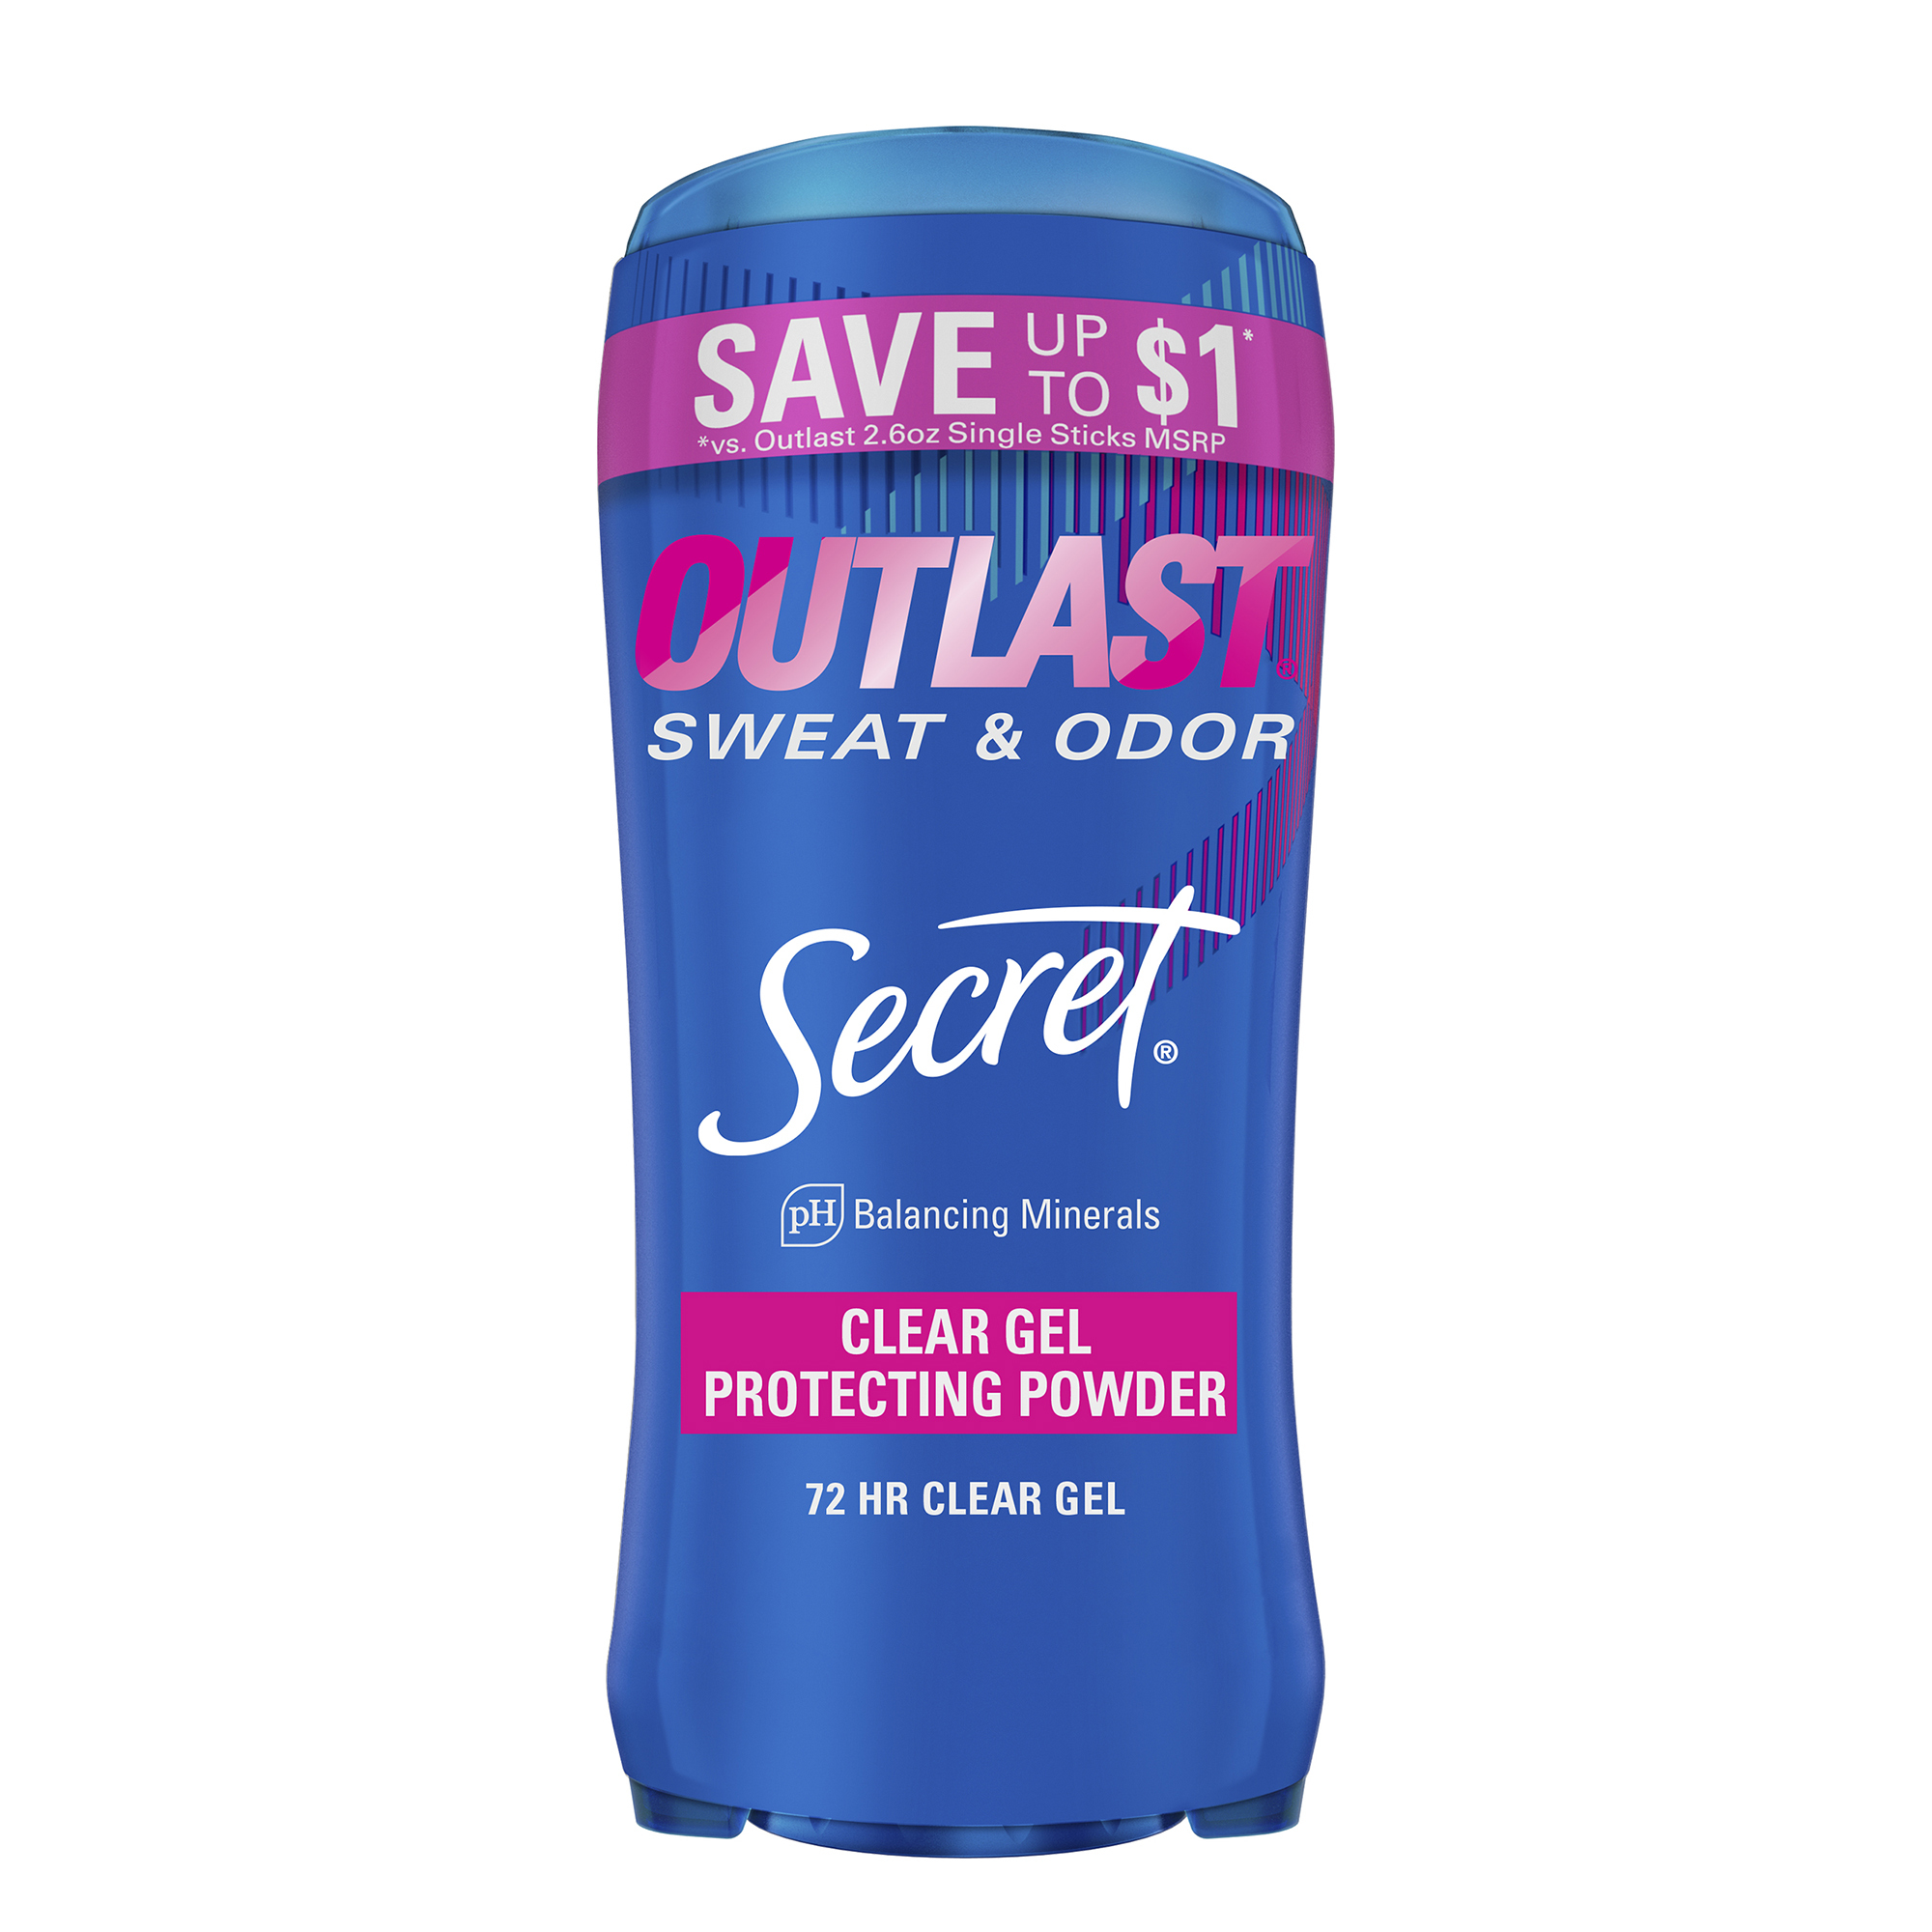 Secret Outlast Clear Gel Antiperspirant Deodorant, Protecting Powder, 2.6 oz, 2 Pack - image 1 of 10